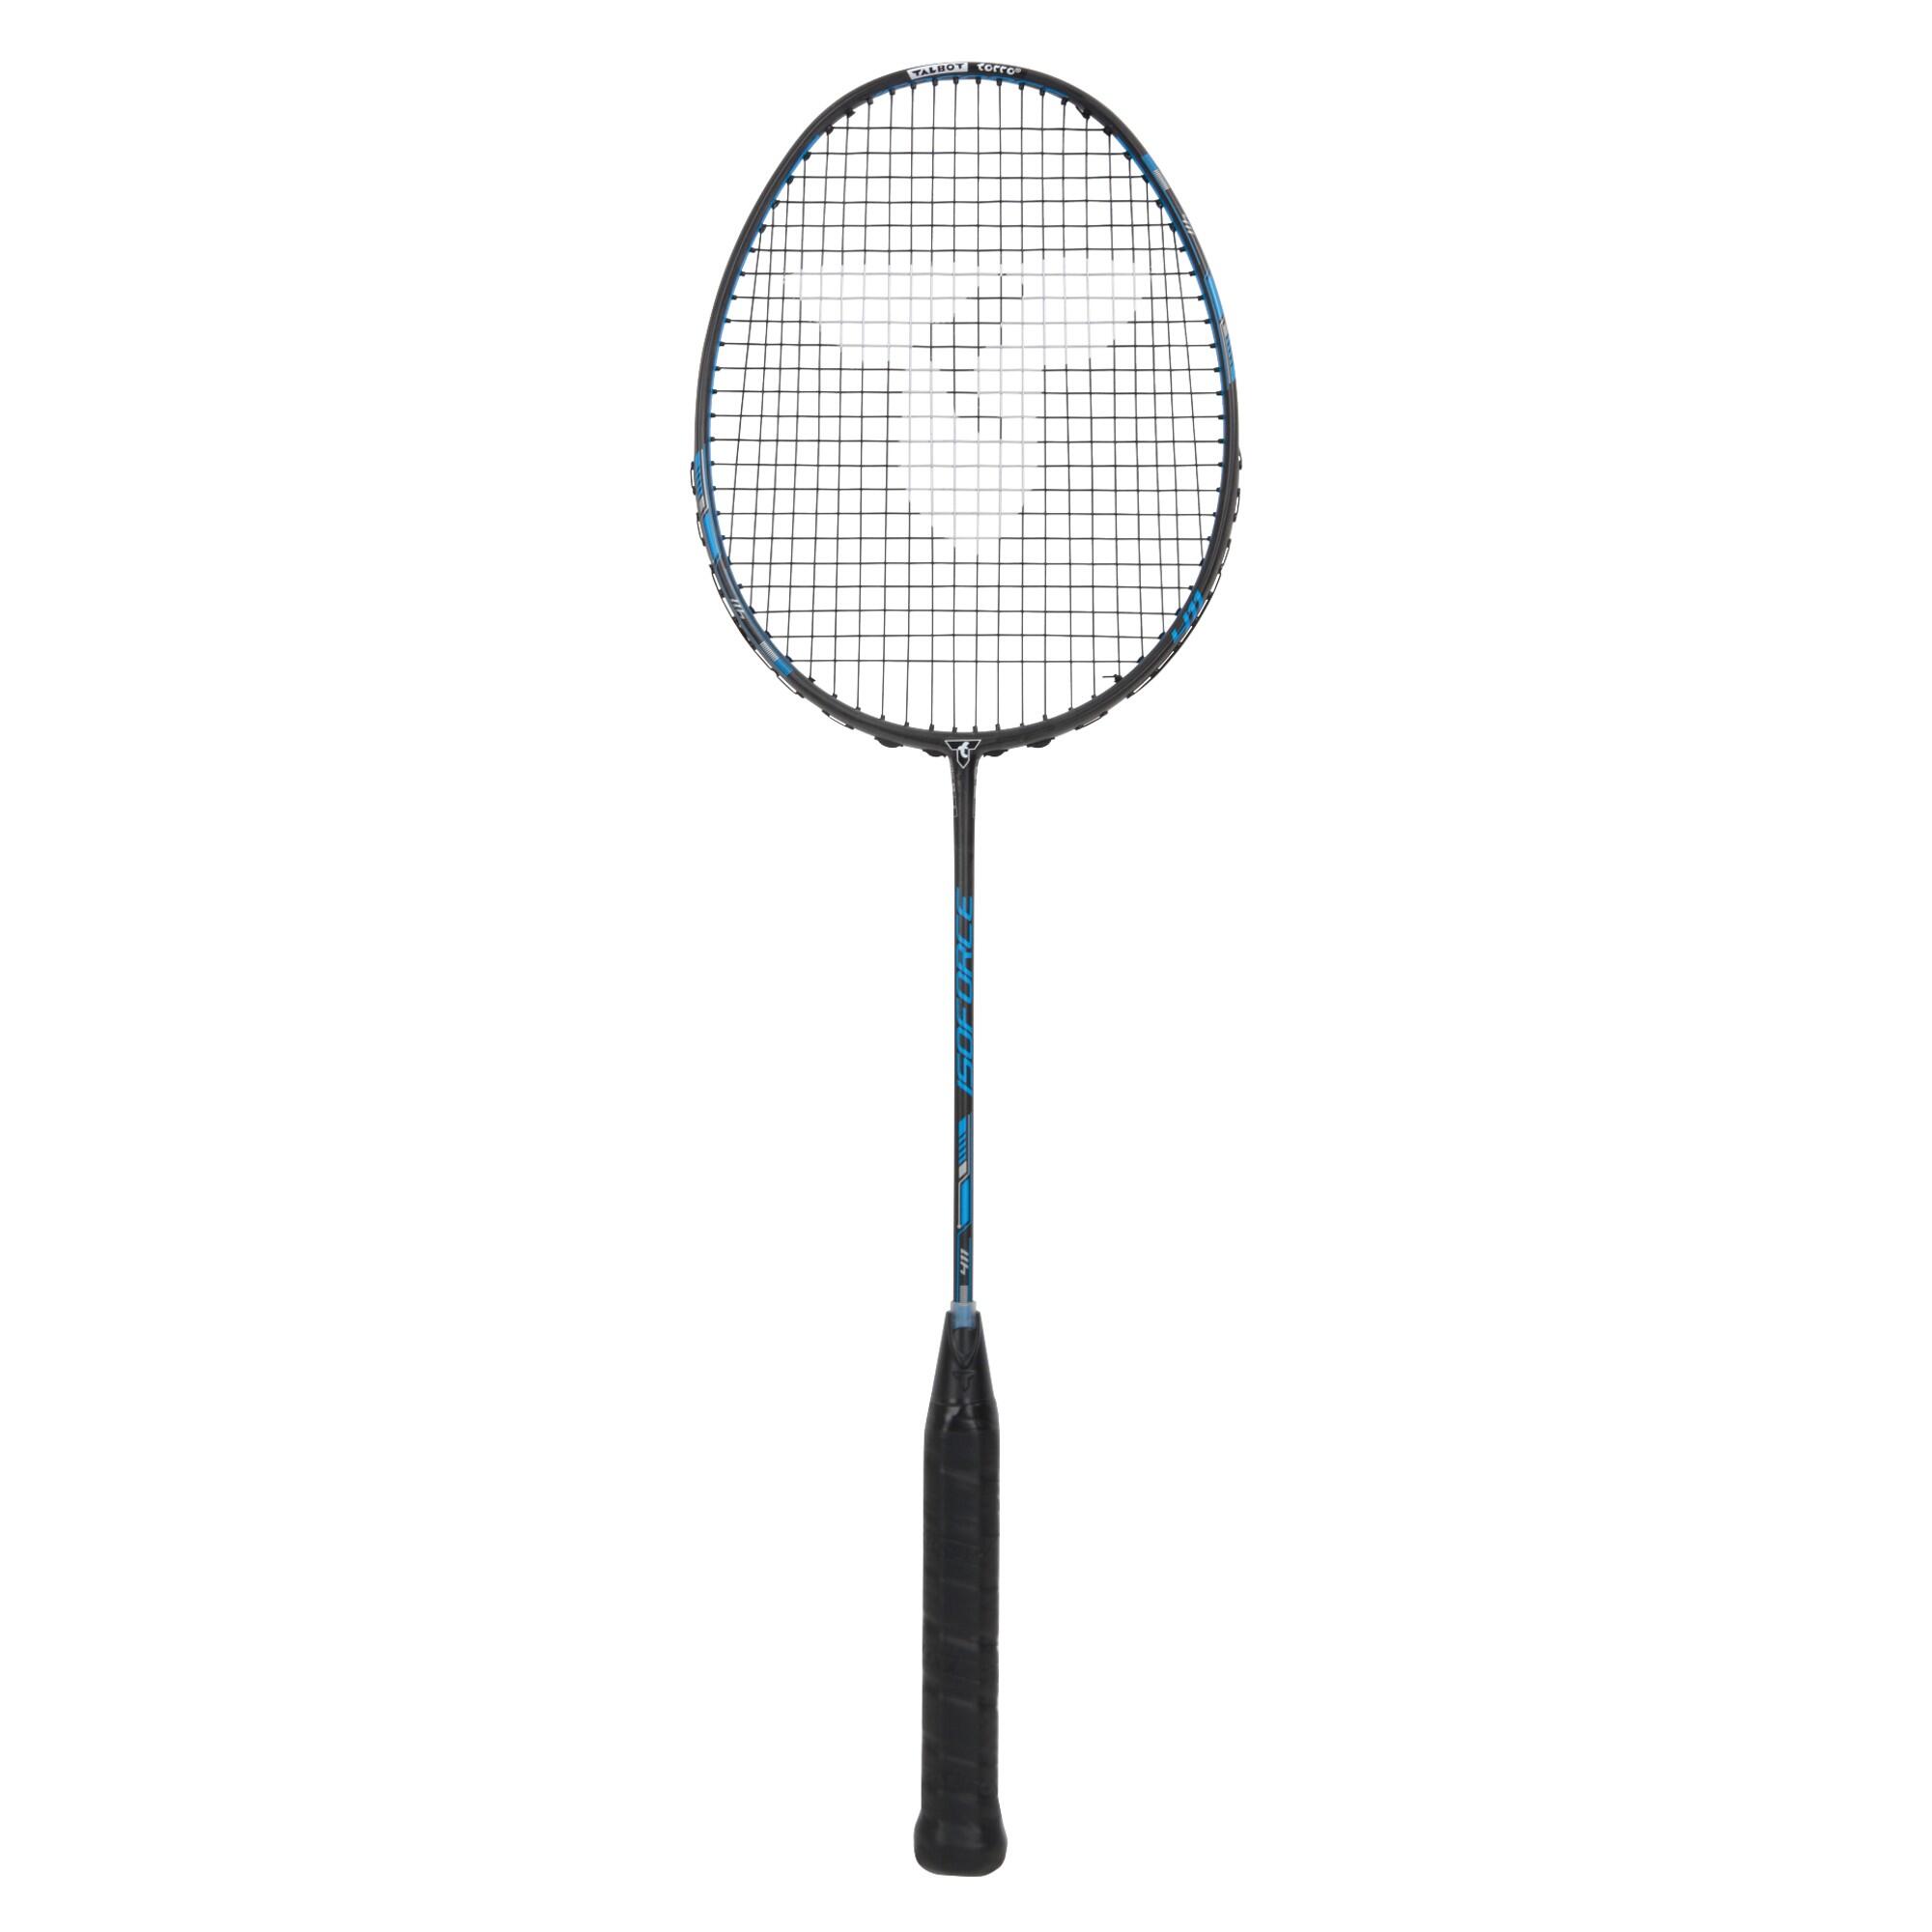 Badmintonschläger Isoforce 411 - schwarz/blau